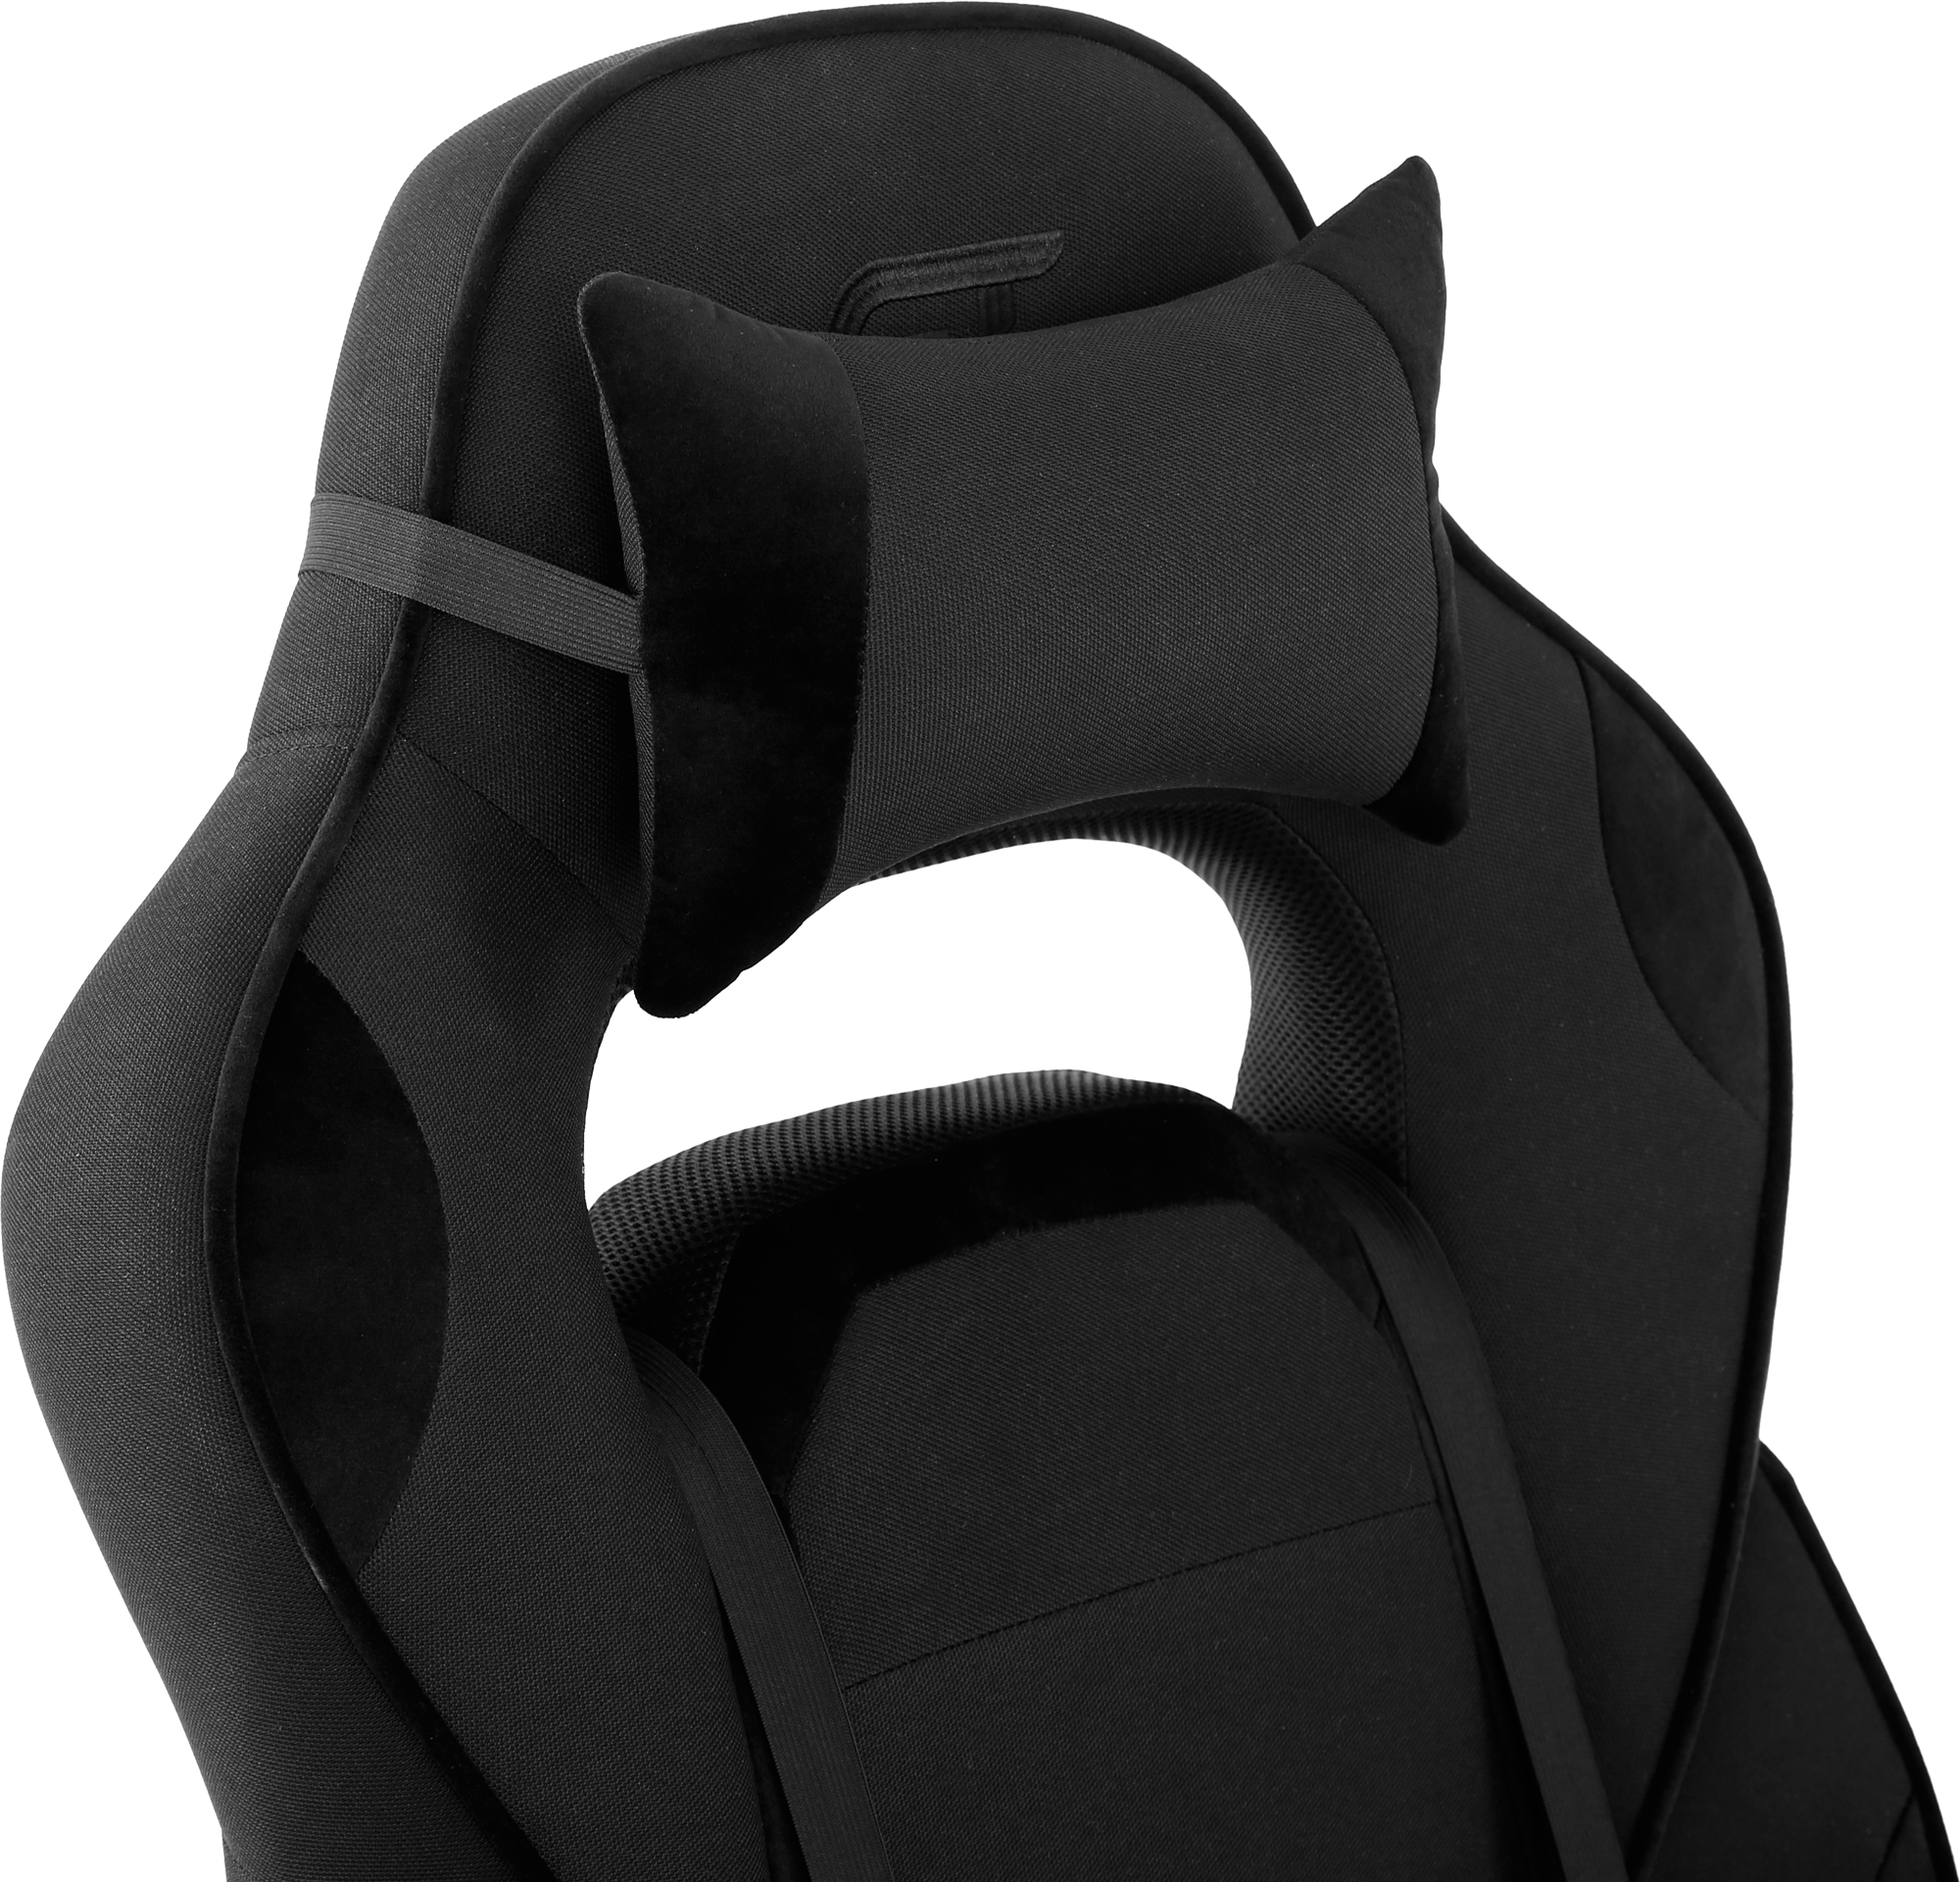 Геймерське крісло GT Racer чорне (X-2749-1 Fabric Black Suede) - фото 9